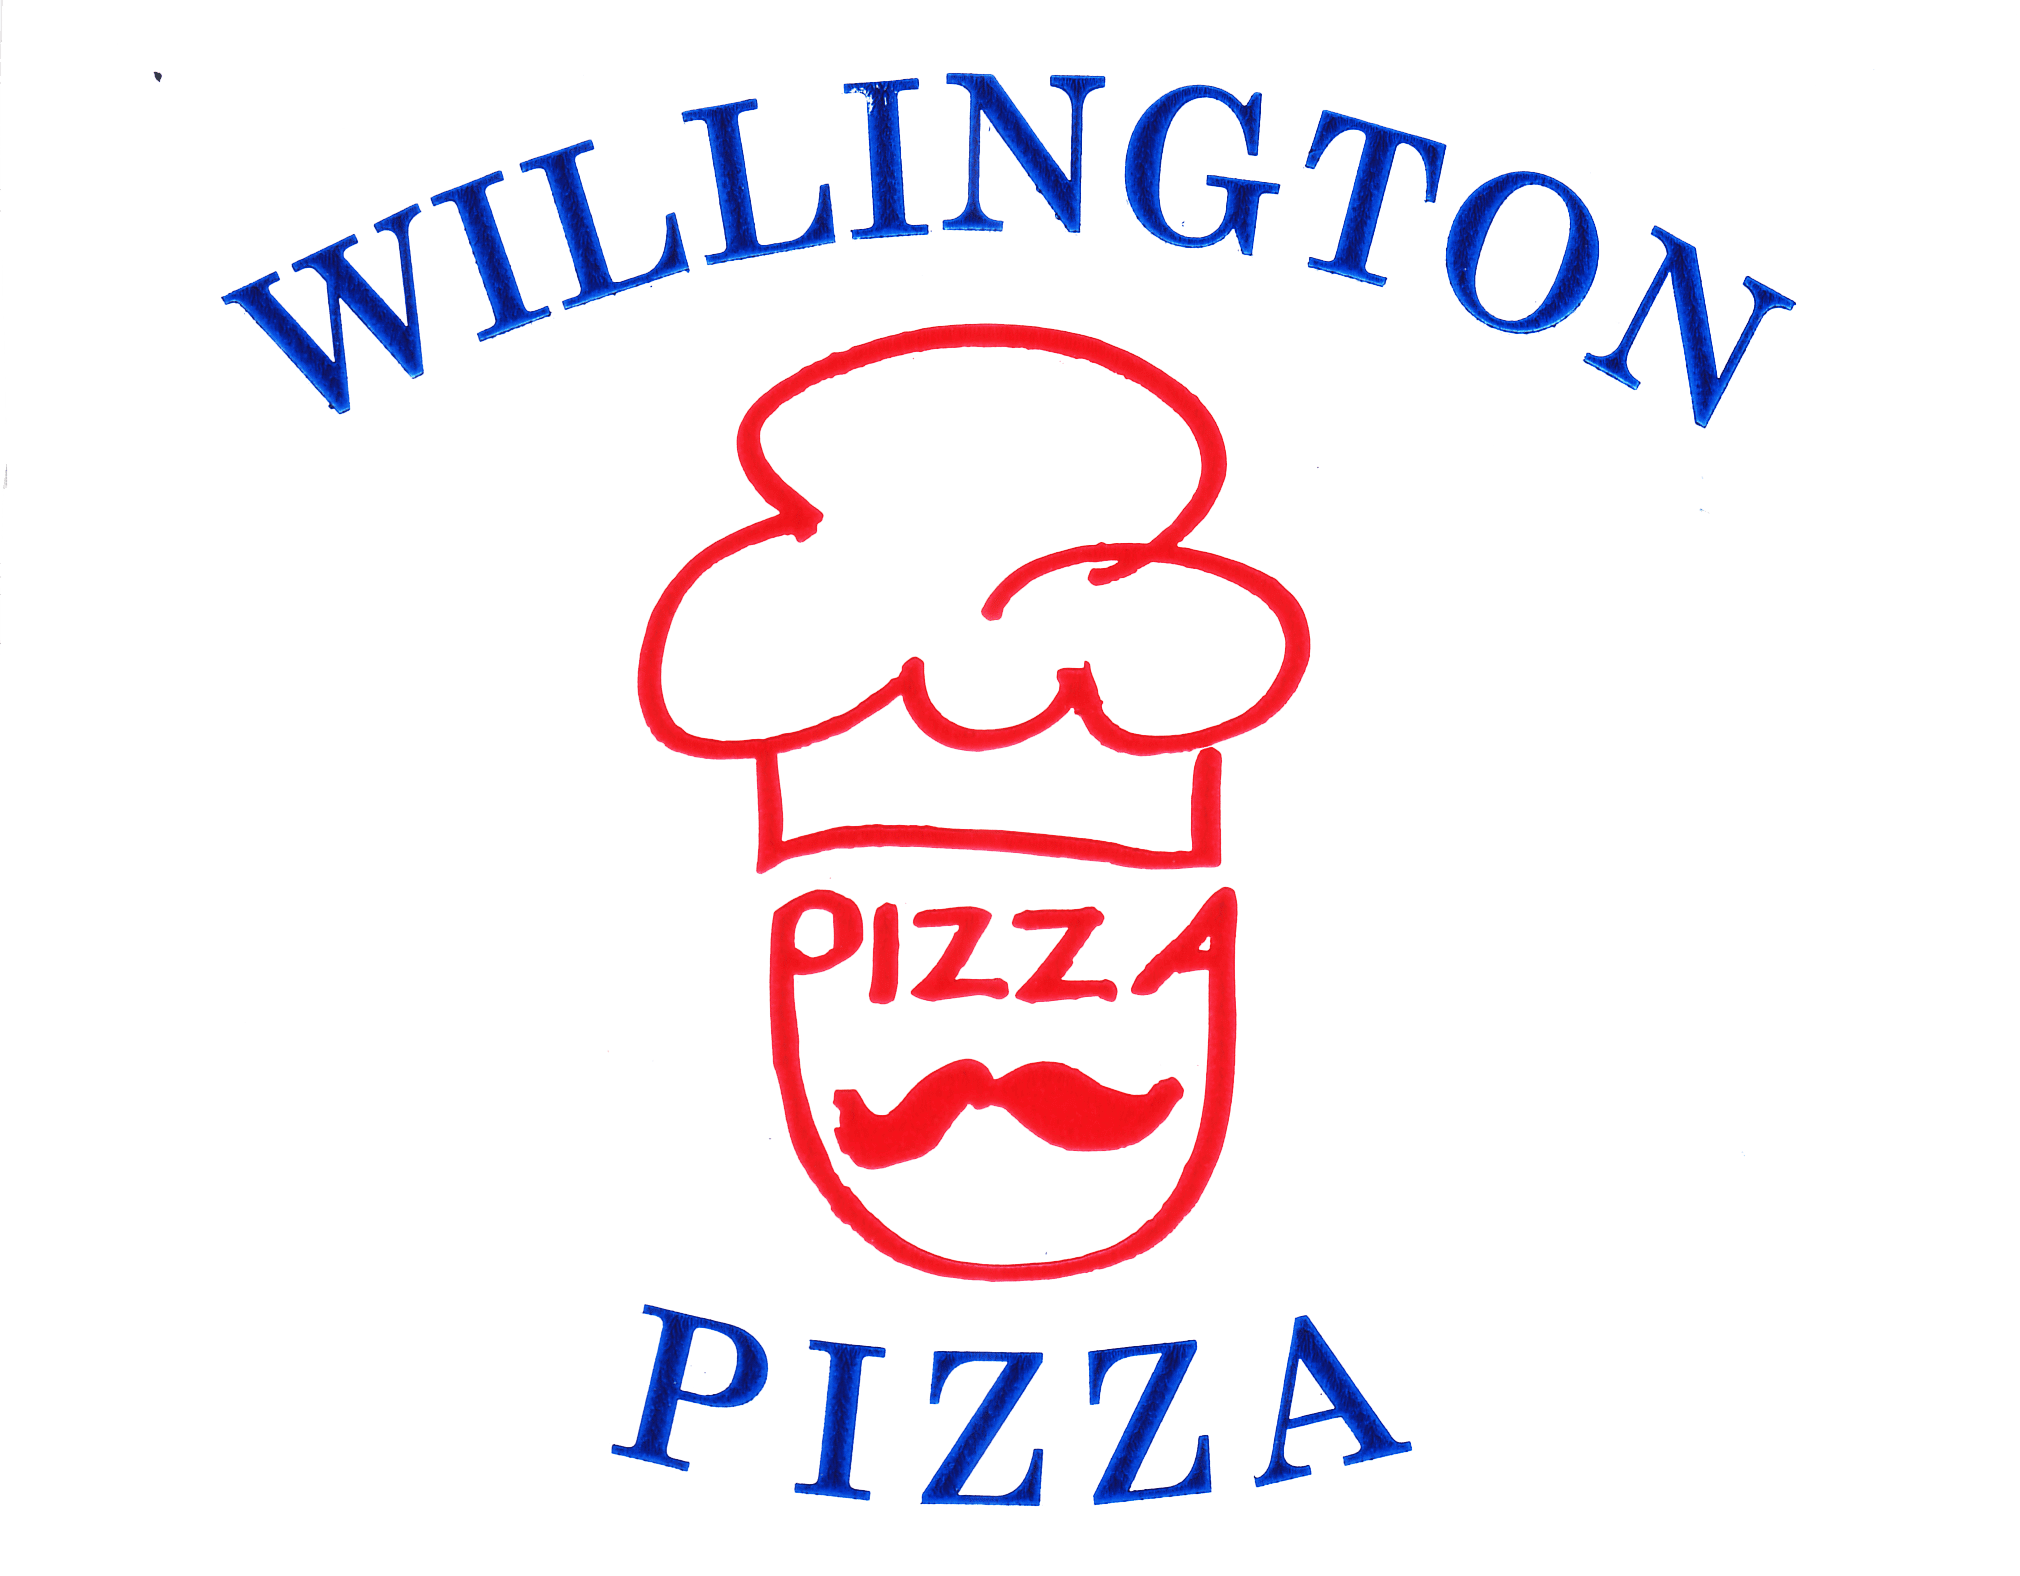 Willington Pizza